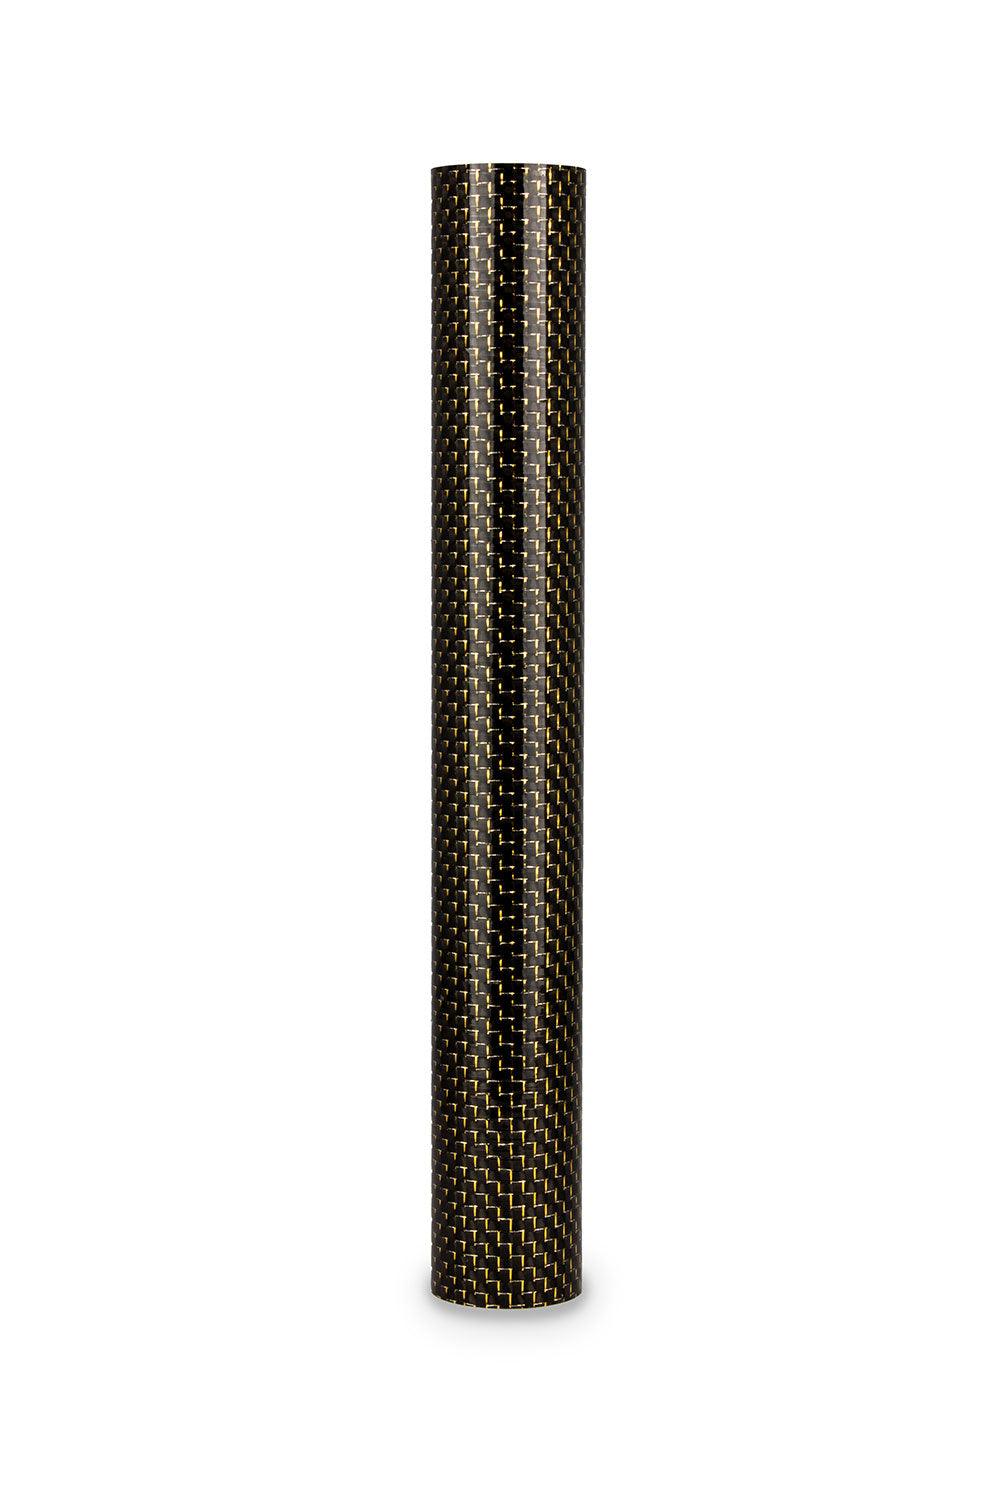 Steamulation Carbon Column Sleeve - Black Gold (Big) - shishagear - UK Shisha Hookah Black Friday